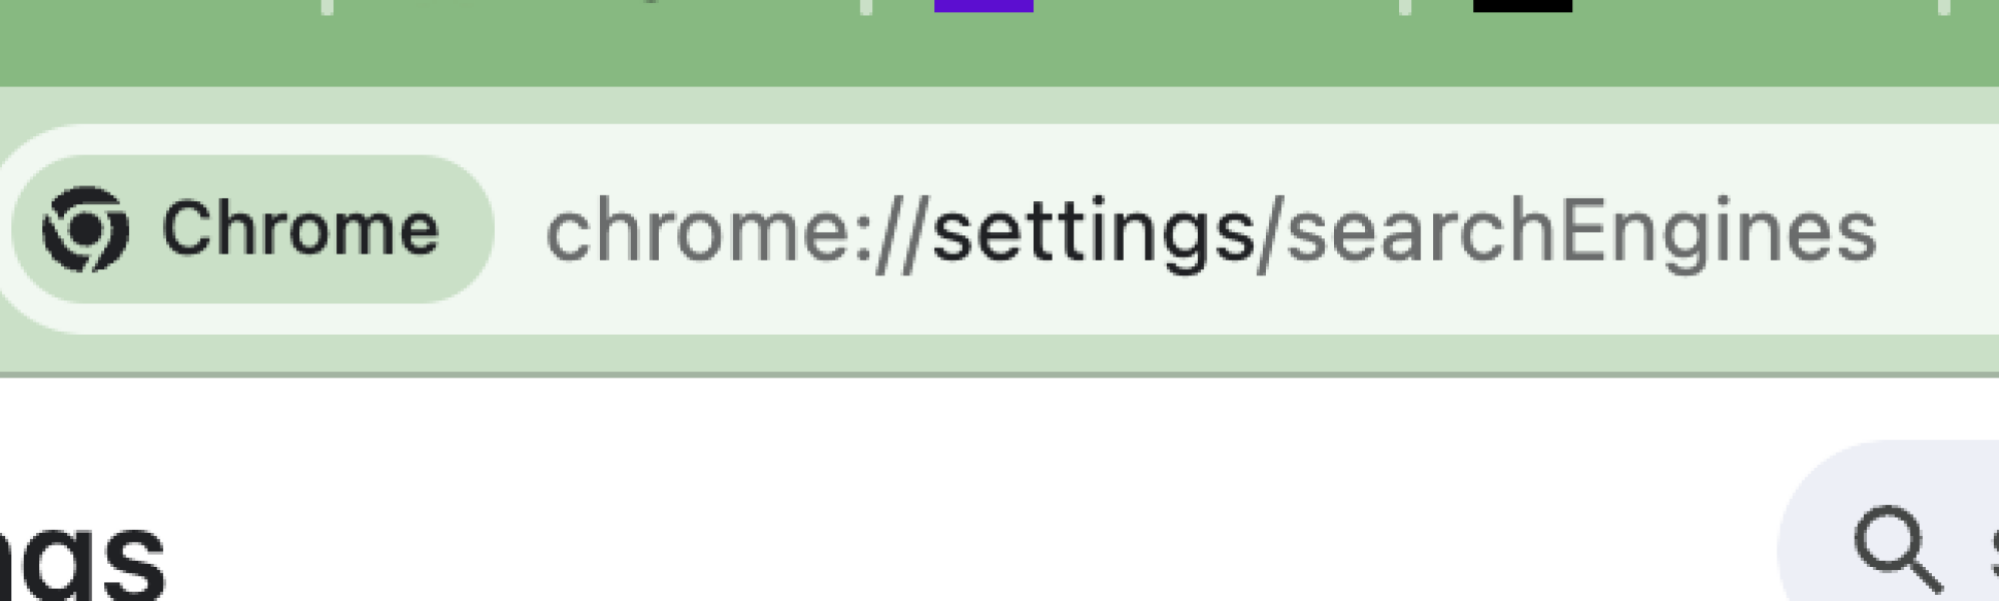 Screenshot of "chrome://settings/searchEngines" in the url bar